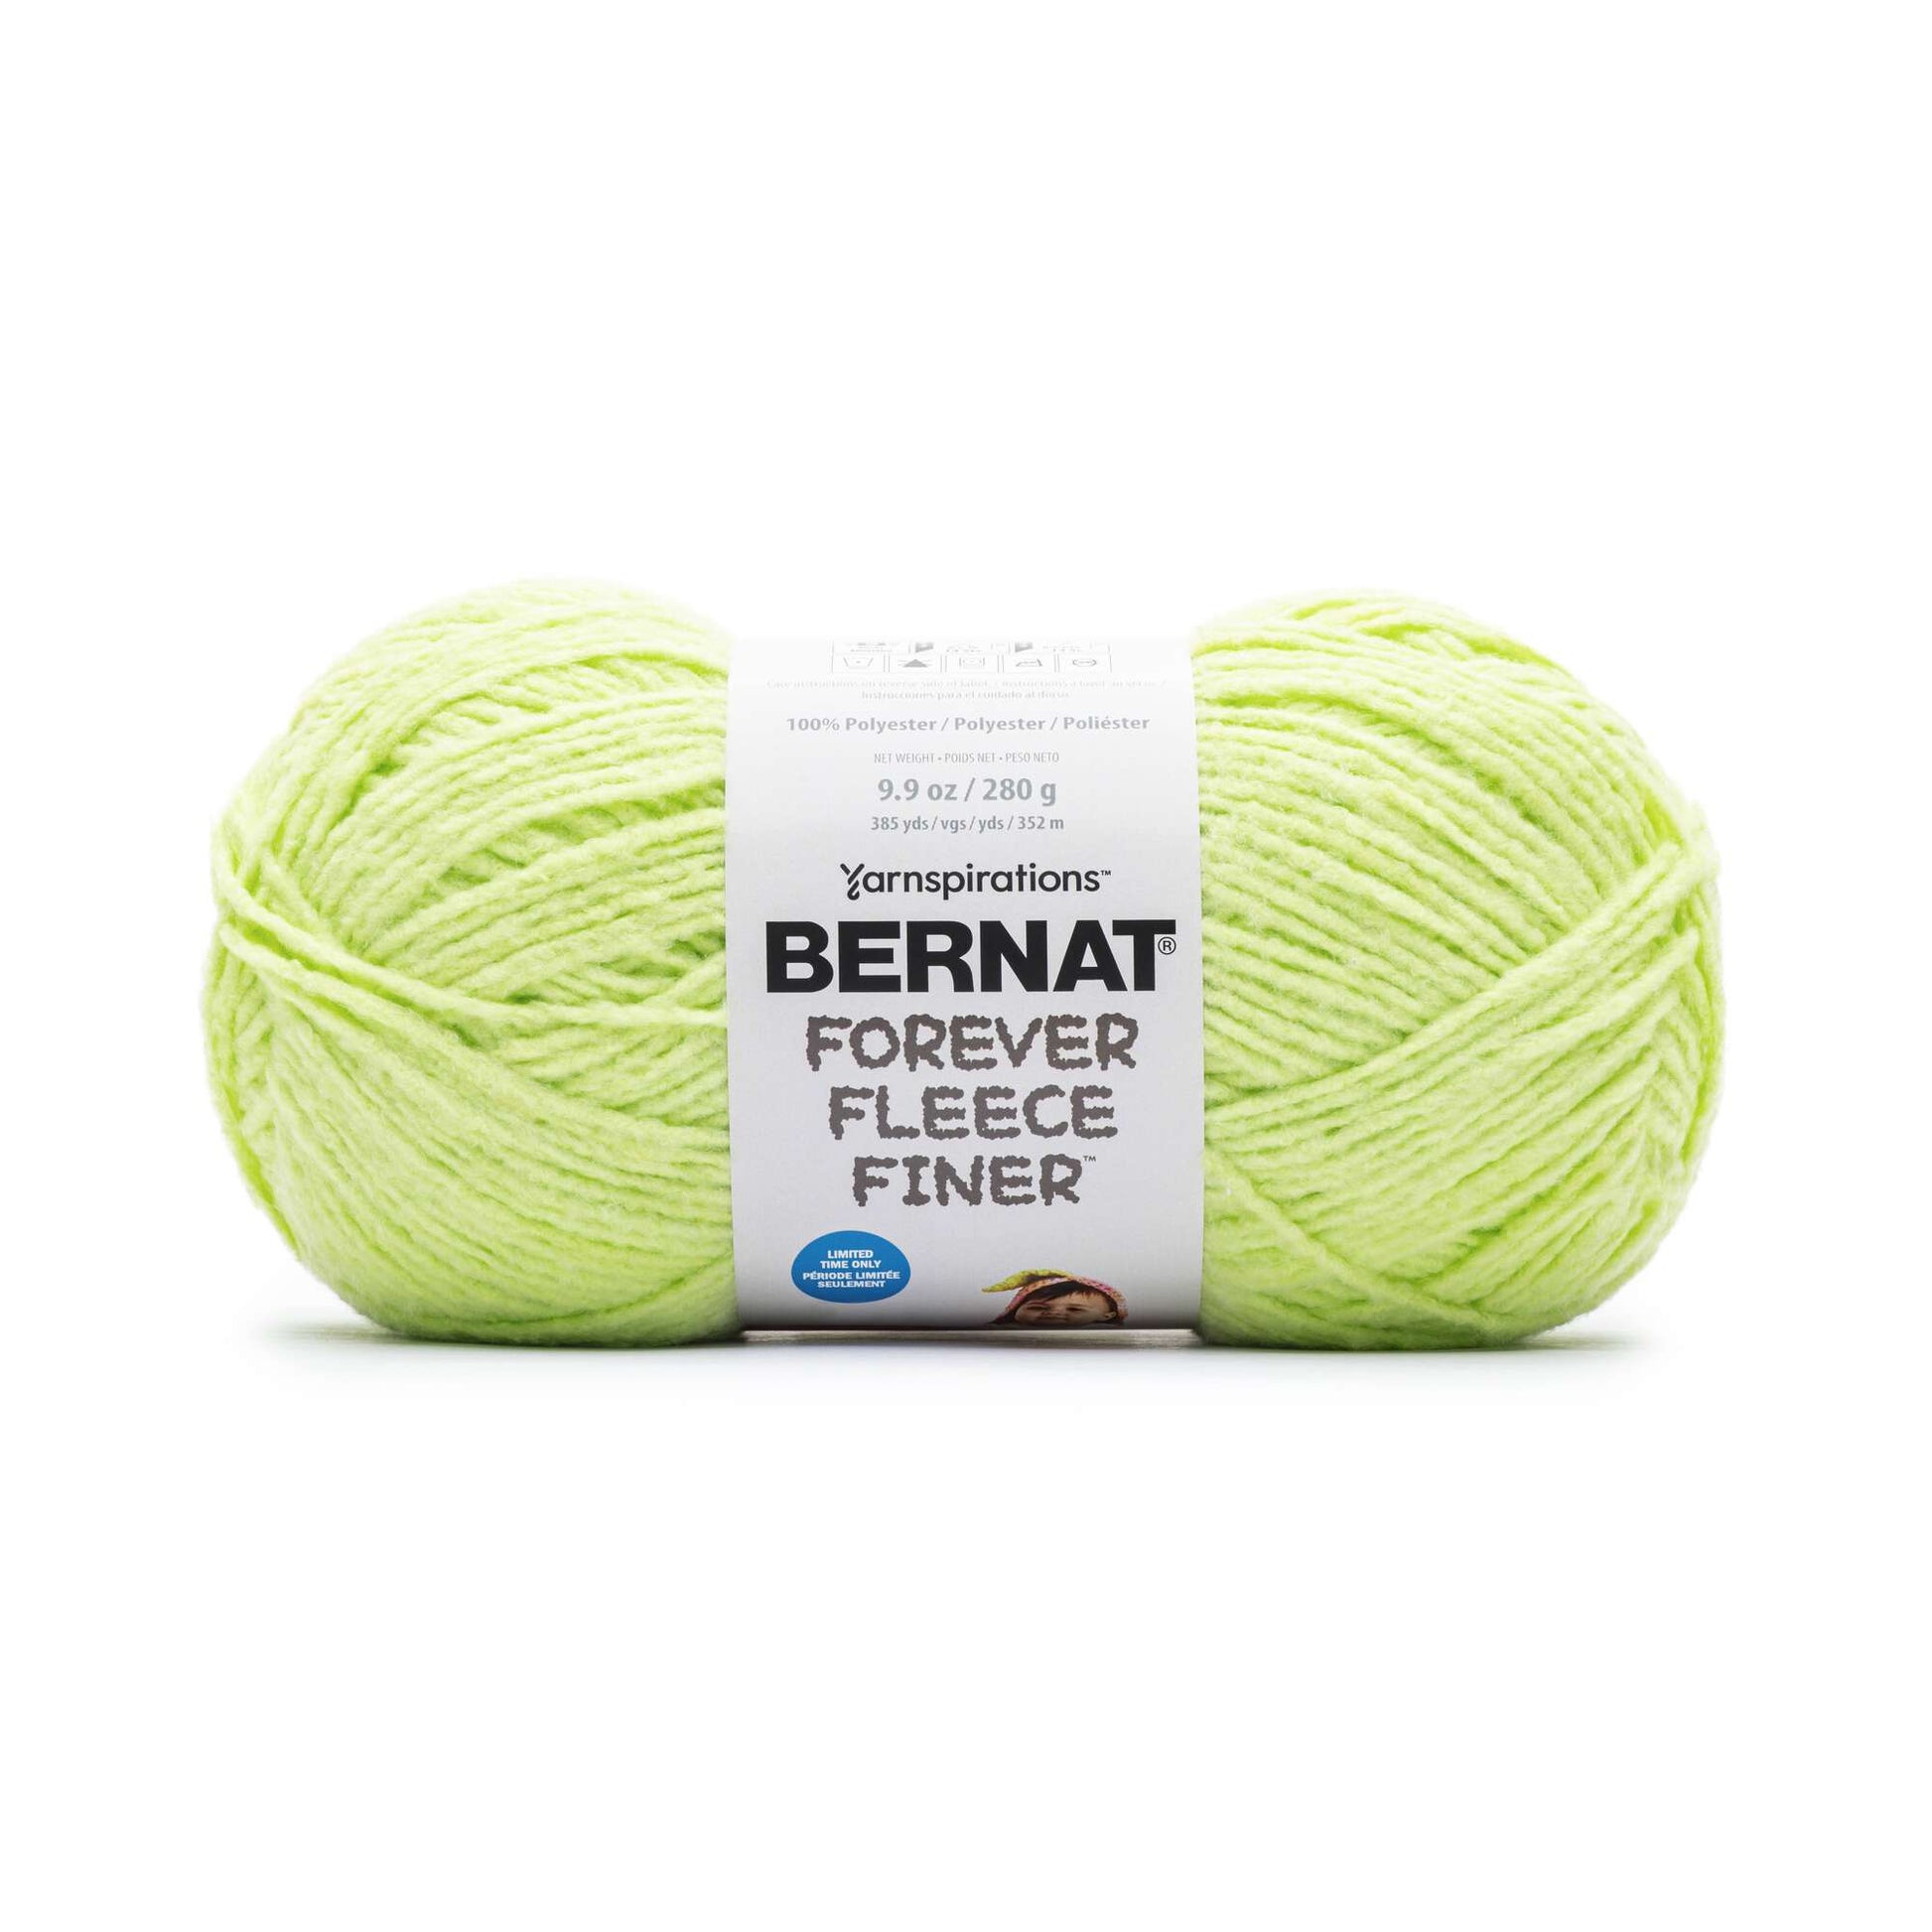 Bernat Forever Fleece Finer Yarn - Discontinued Shades Zing